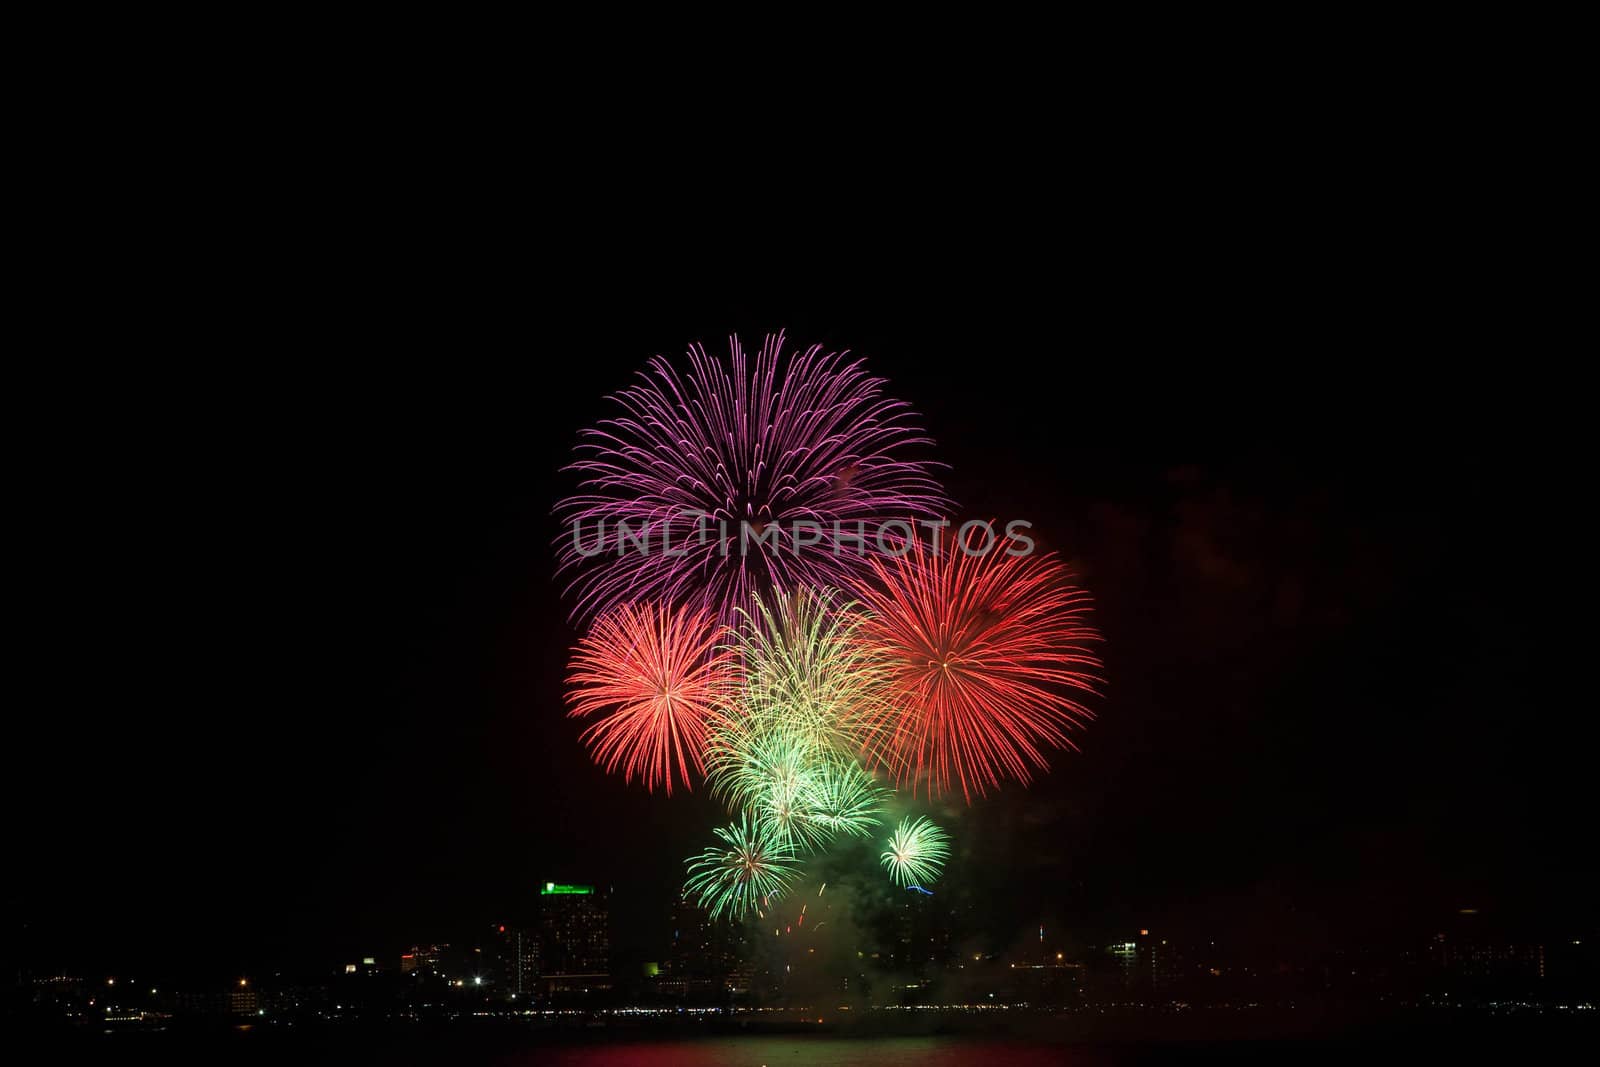 Fireworks by thanatip